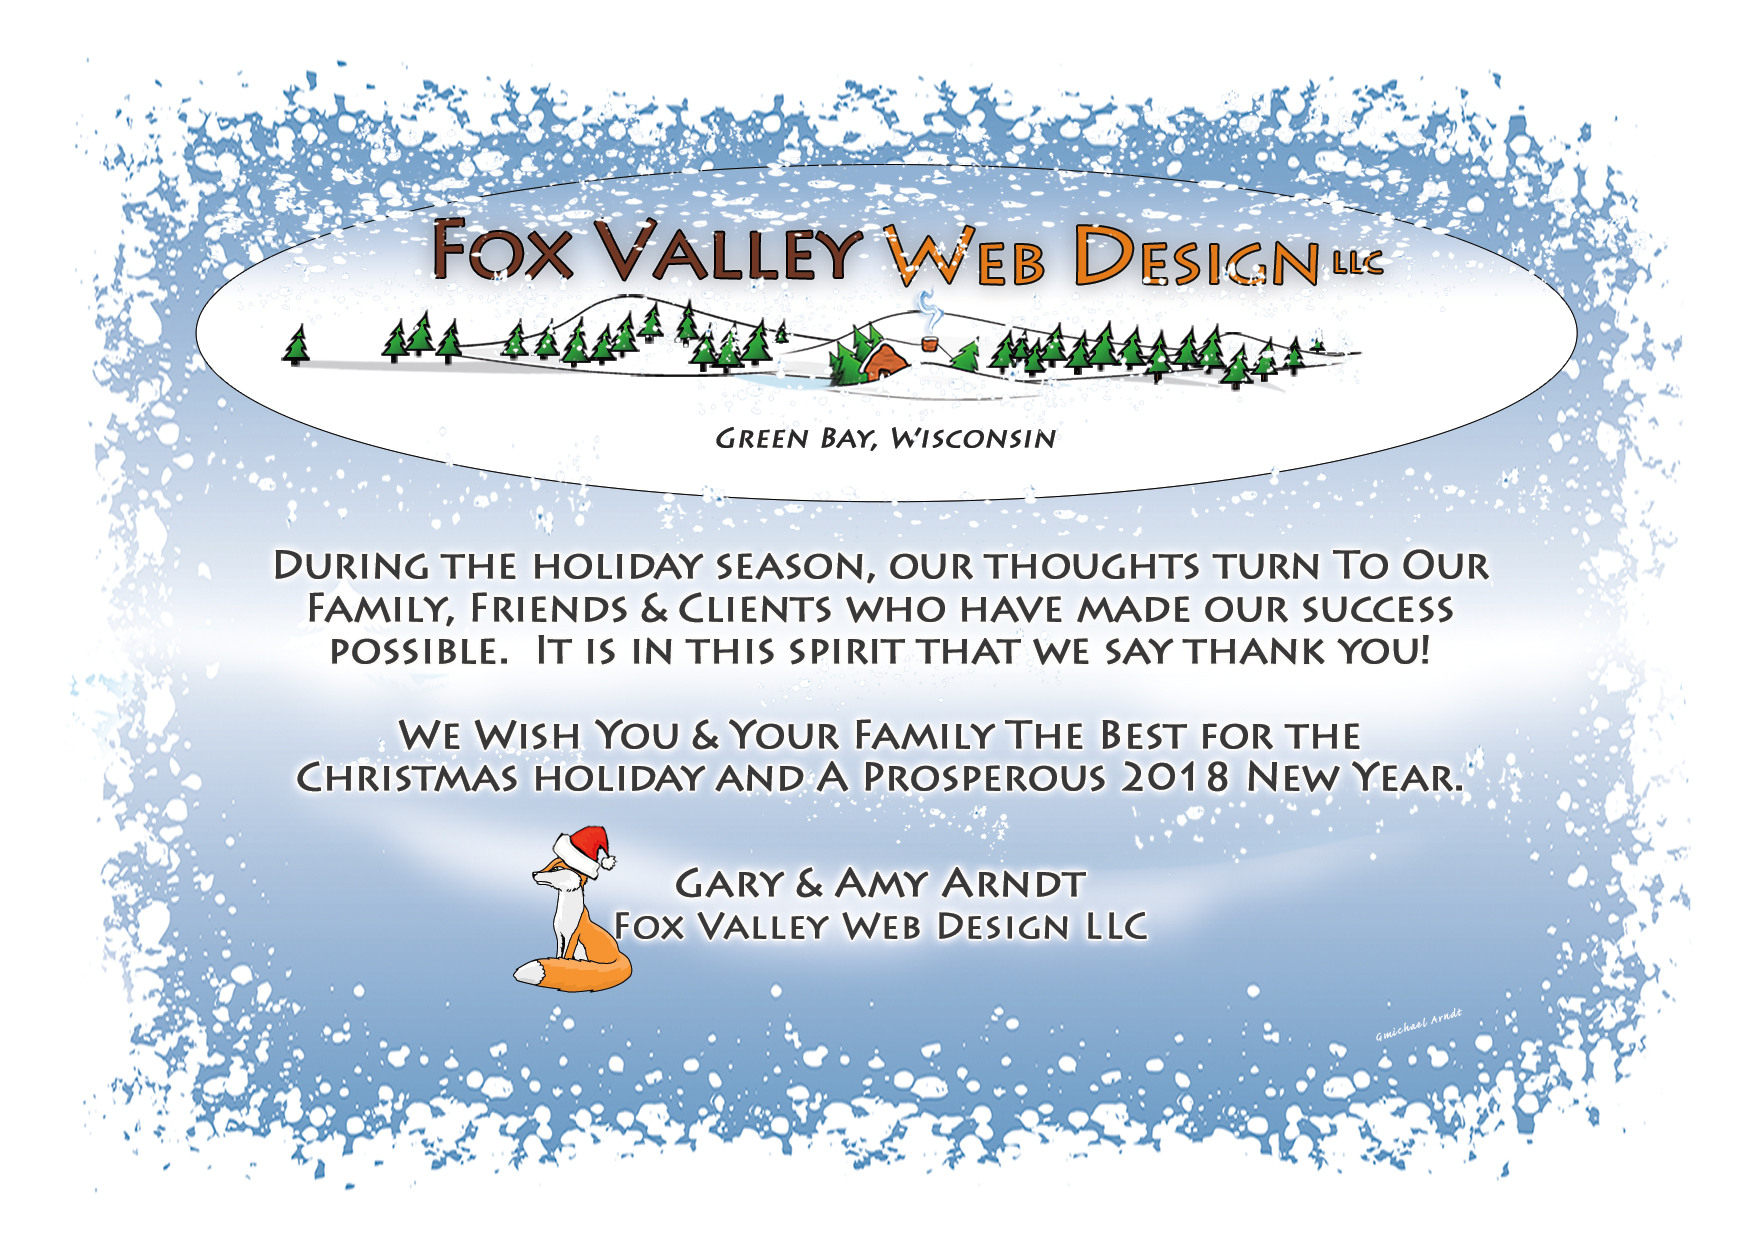 Fox Valley Web Design,Wisconsin website designers,graphic designer,happy holidays,happy new year,fvwd